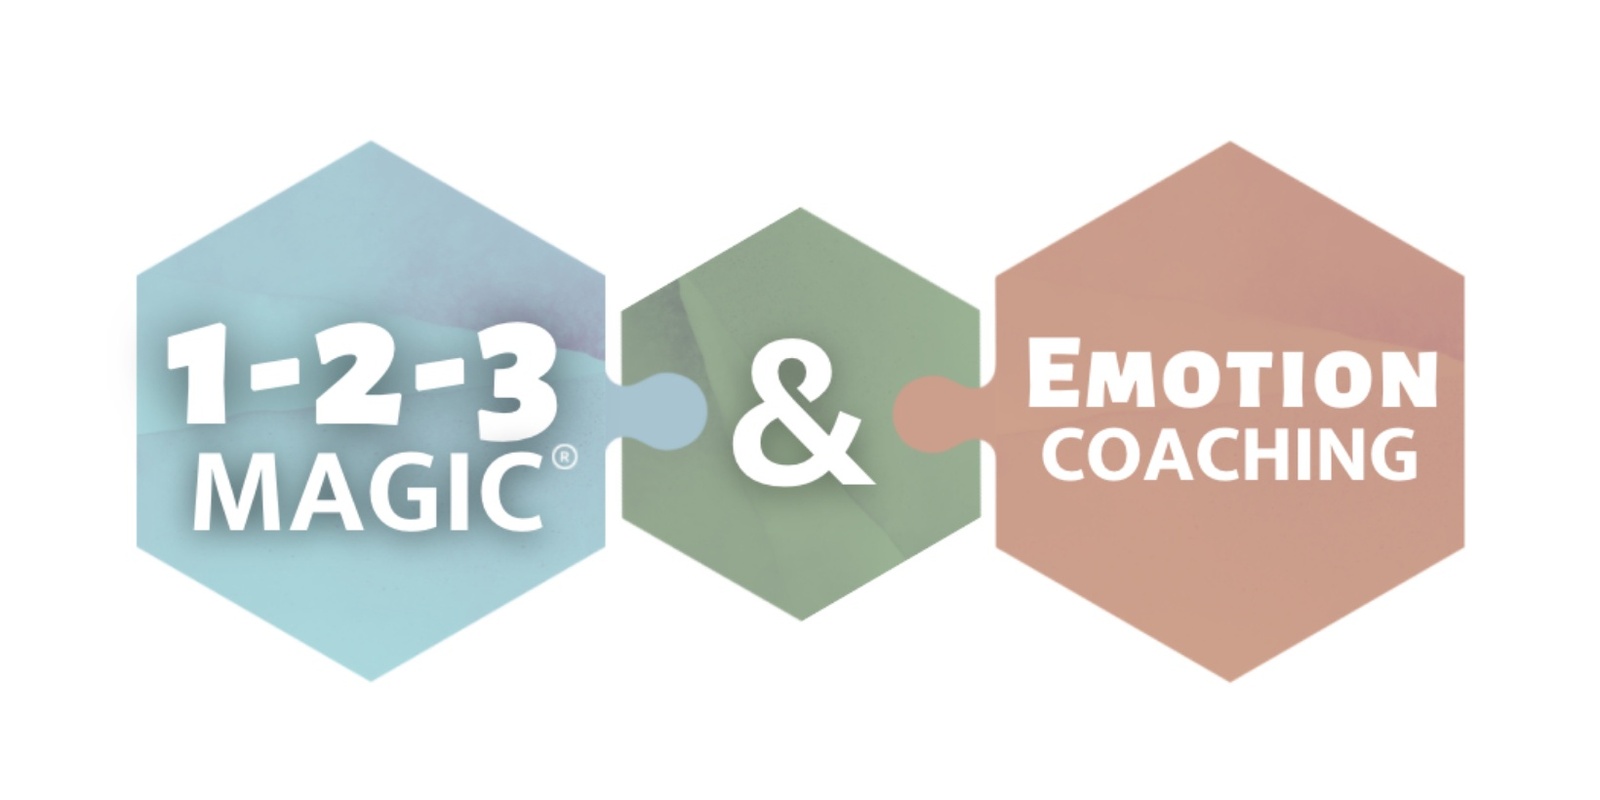 Banner image for 123 Magic & Emotion Coaching Aug/Sep